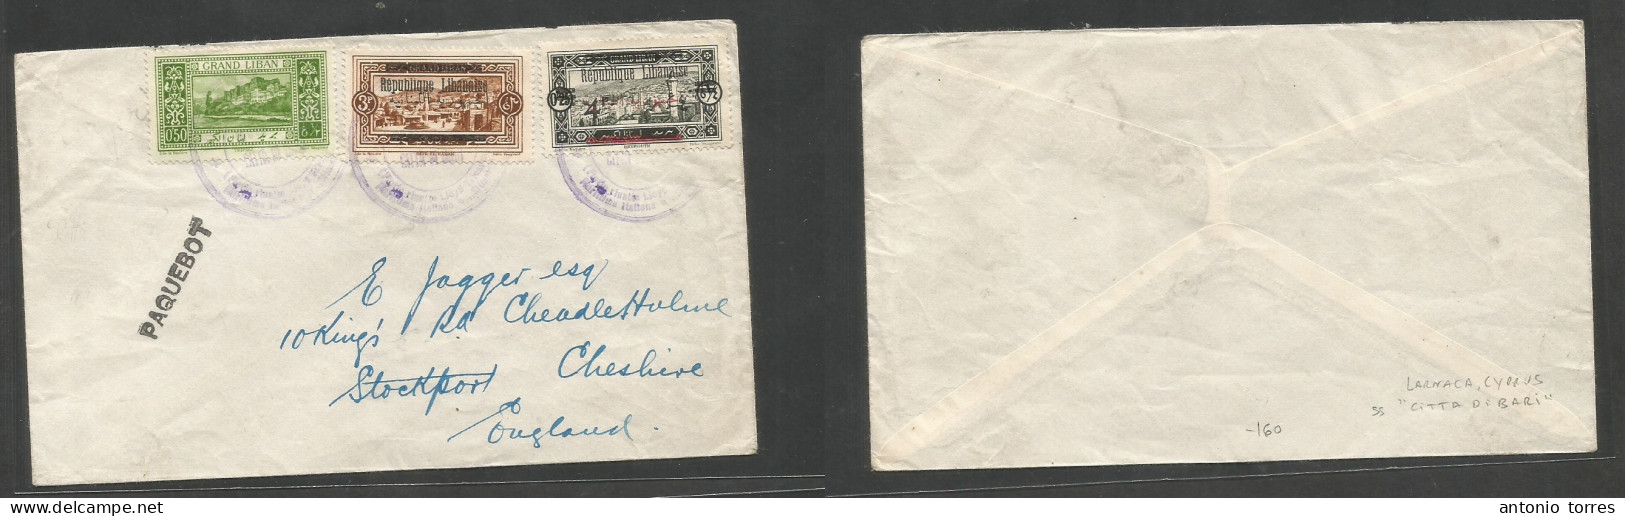 Lebanon. C. 1928. Multifkd Pqbt Mail Envelope To Stockport, England, Lilac Cachet "Citta De Bari" Cancelled On Transit A - Líbano